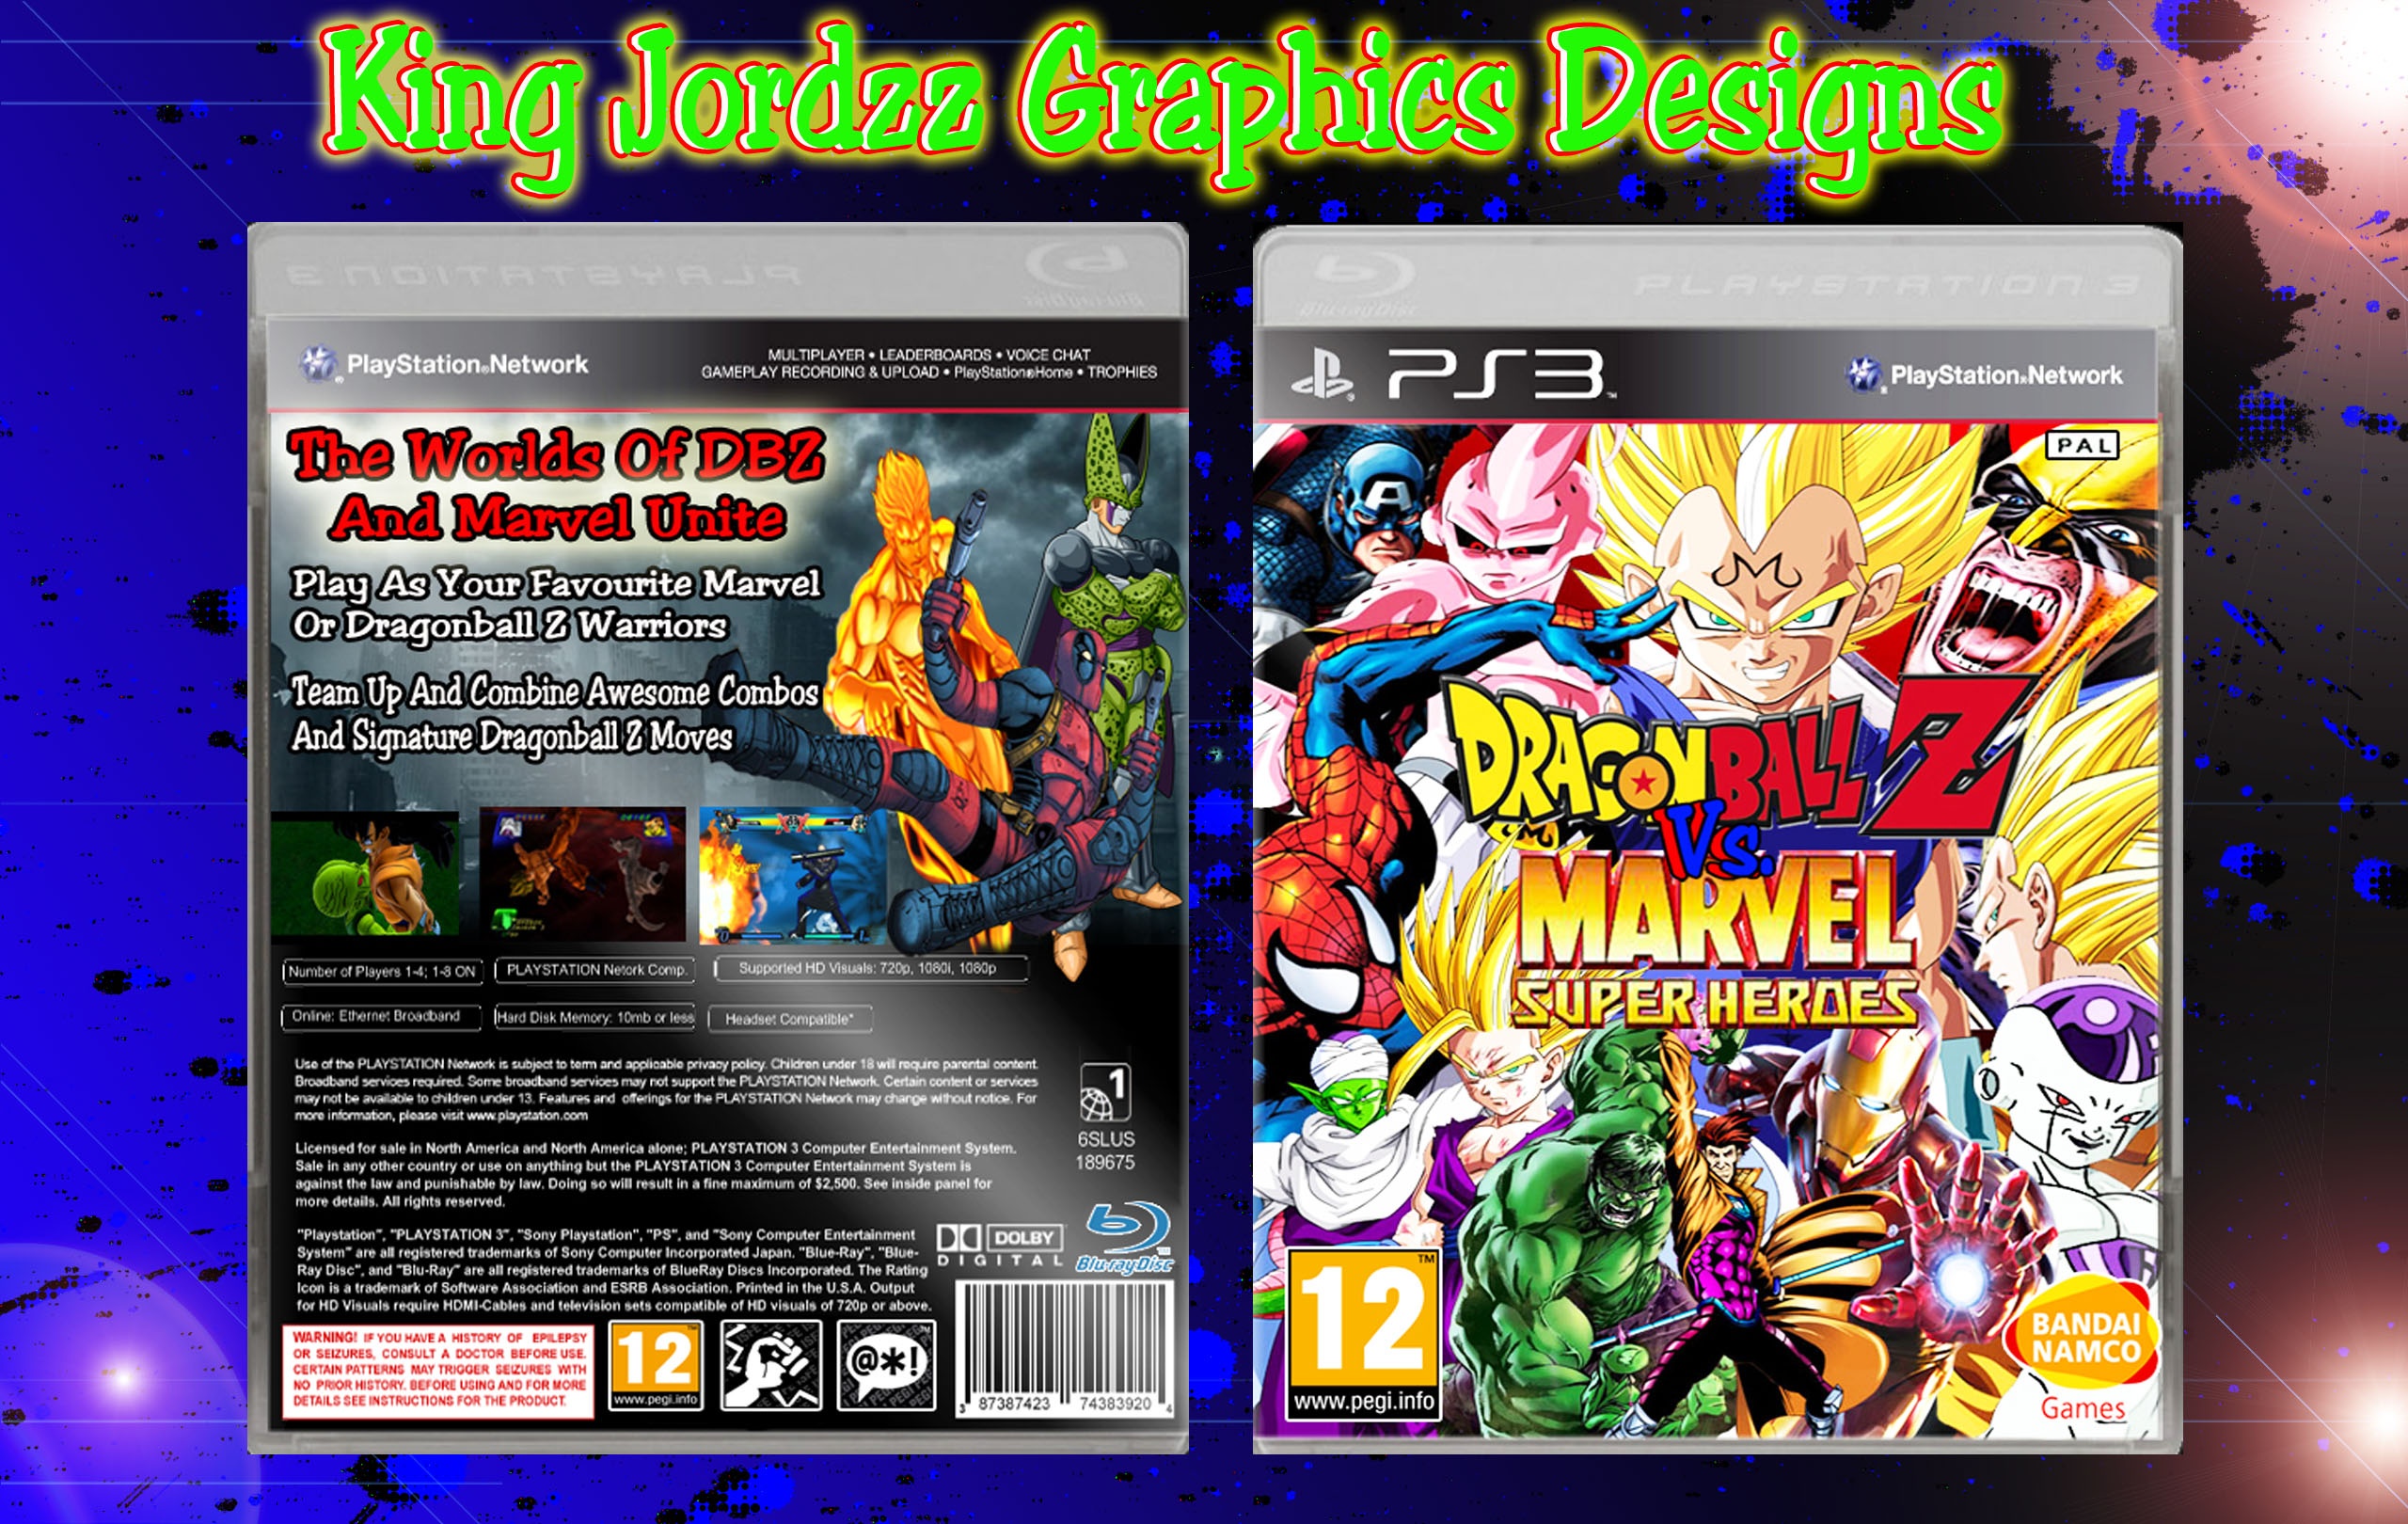 Dragonball Z Vs. Marvel Superheroes box cover